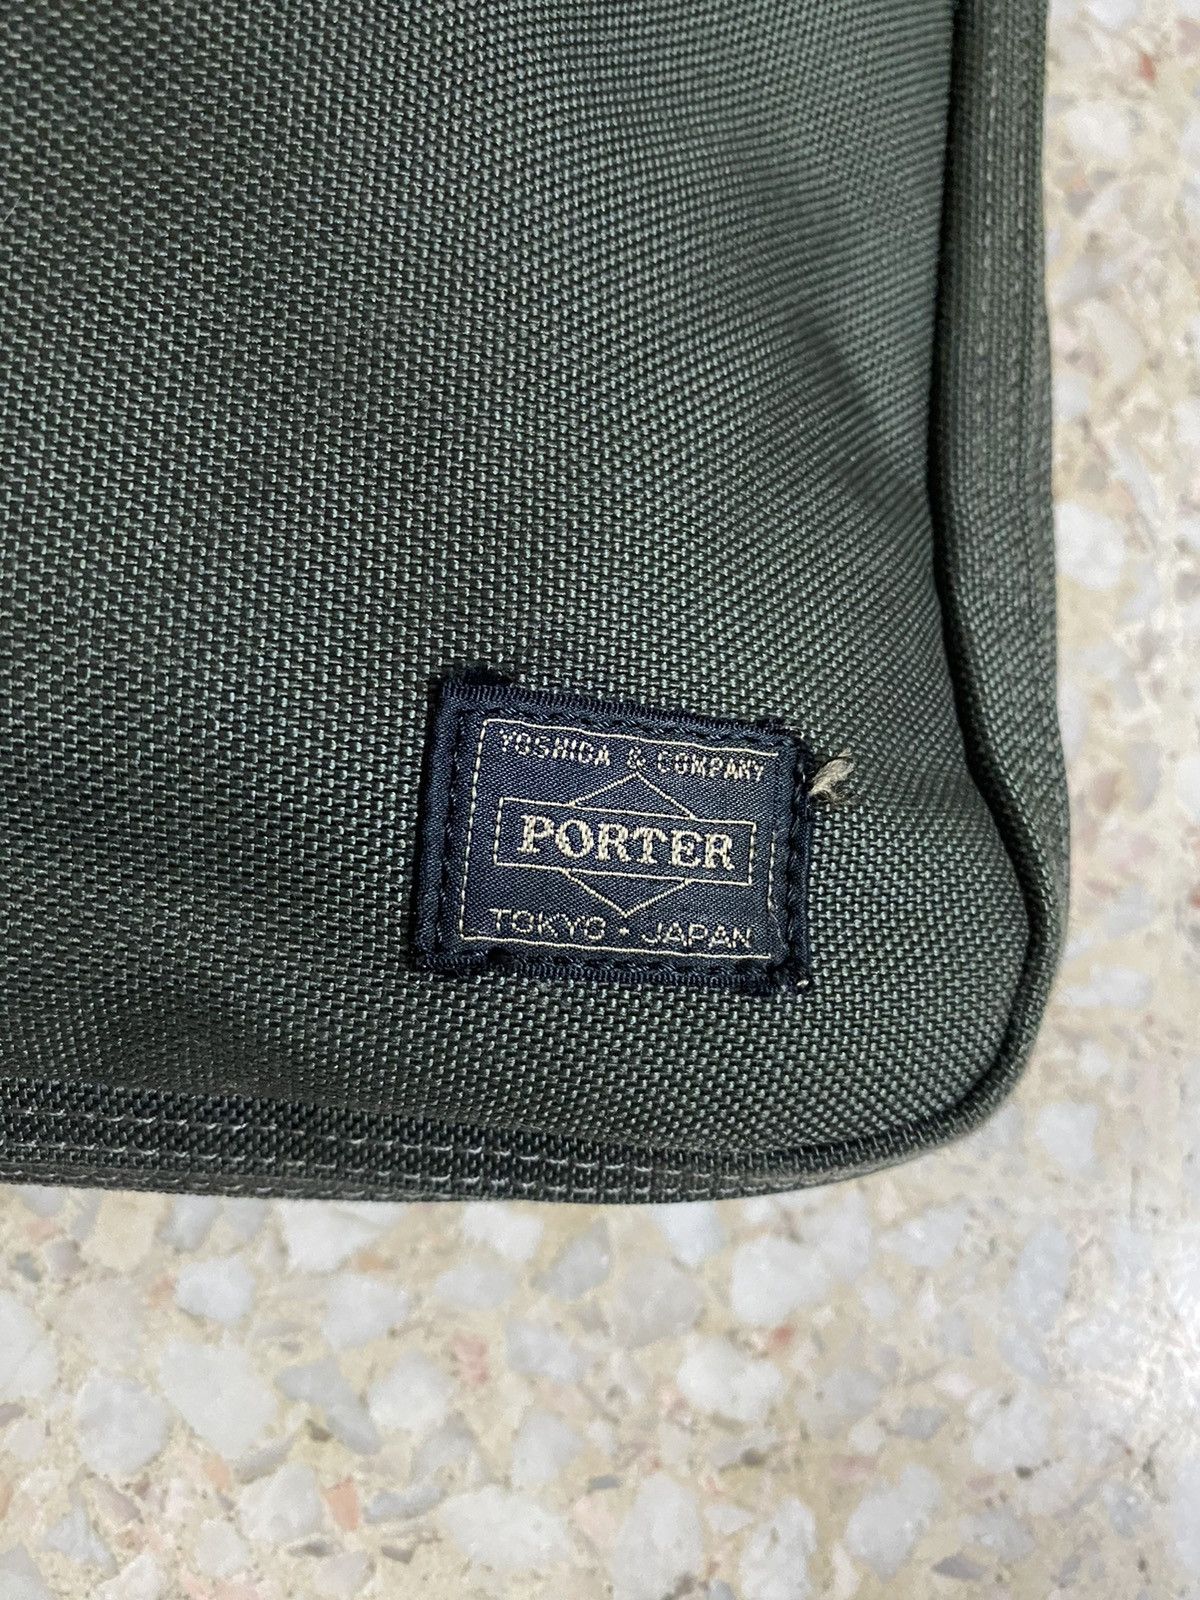 Porter Cordura Messenger Bag Green Army Made in Japan - 4